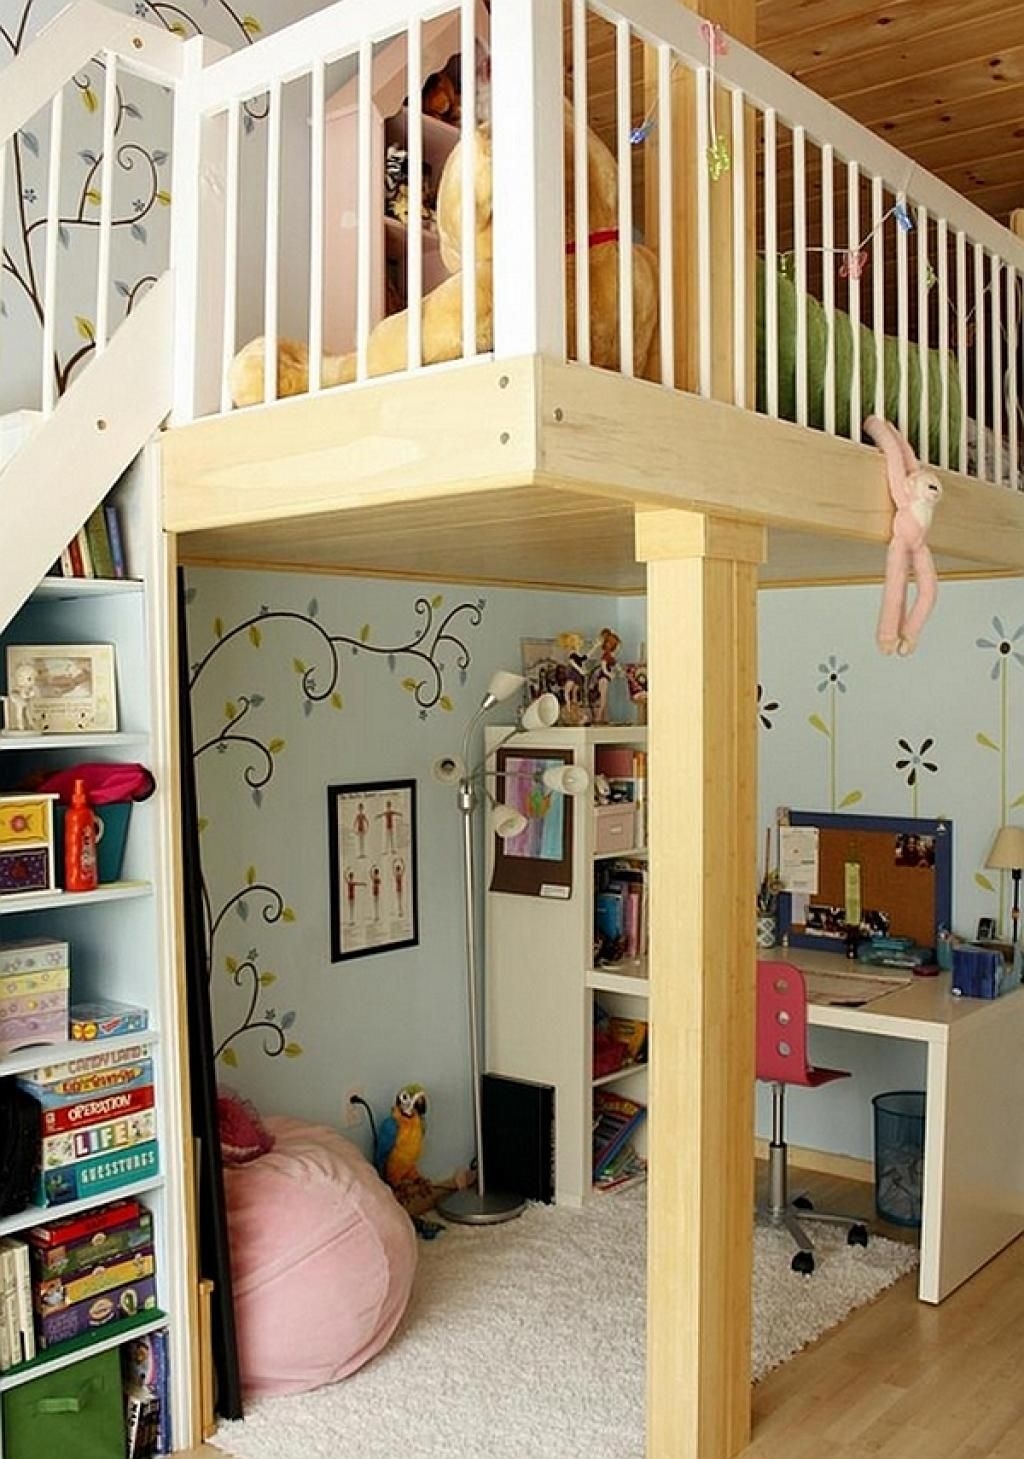 loft beds for little girls